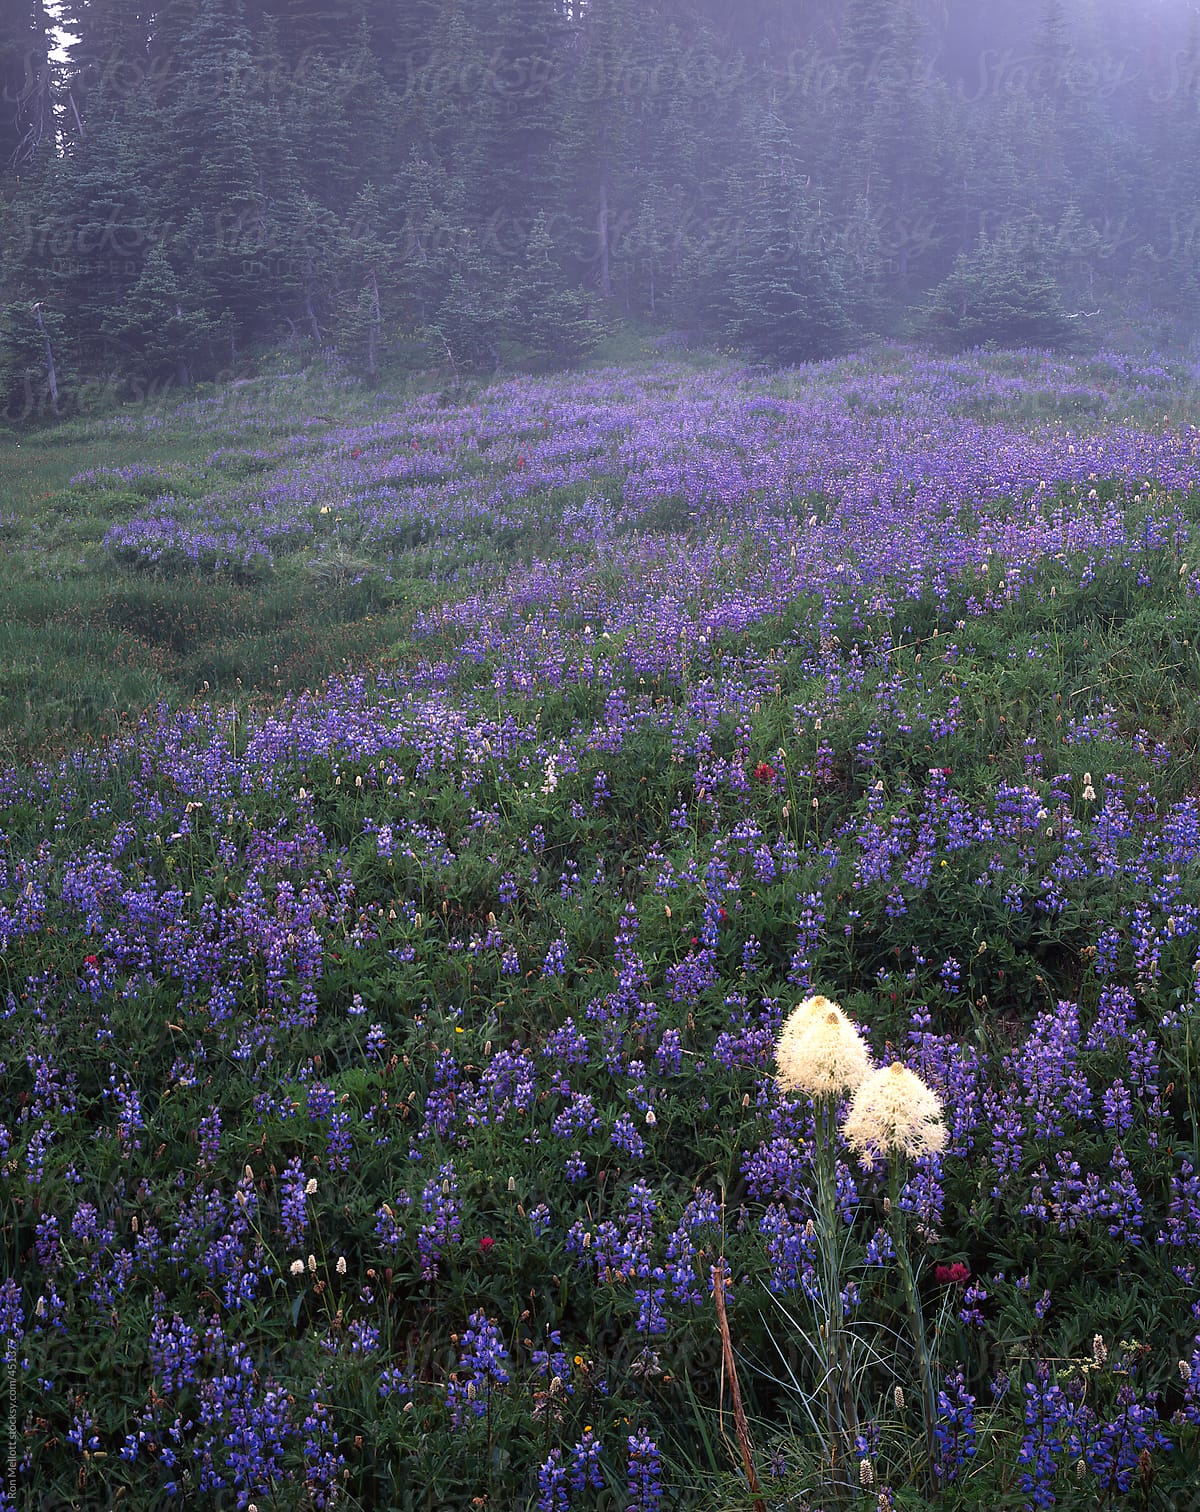 mountain subalpine meadow with bear grass (xerophyllum) lupine (lupinus) American bistort